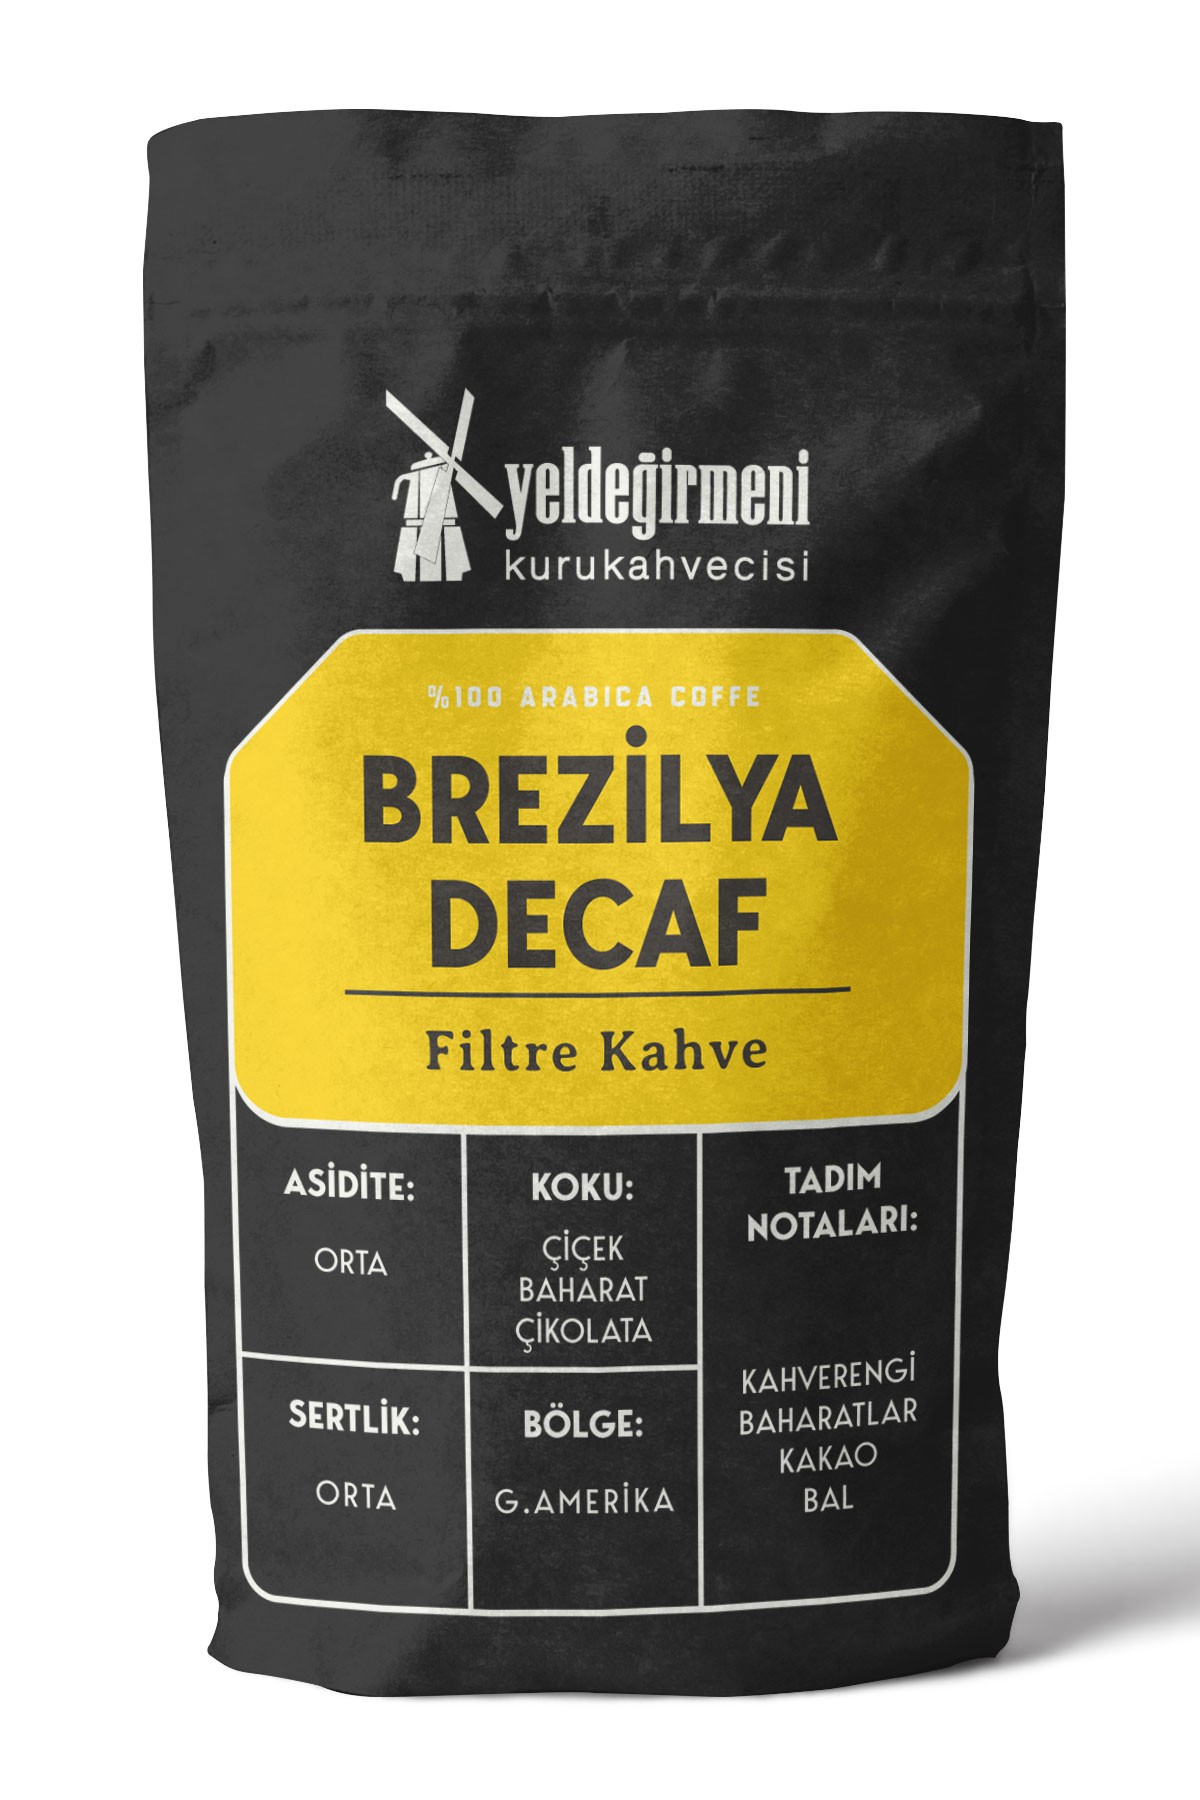 Brezilya Decaf Filtre Kahve